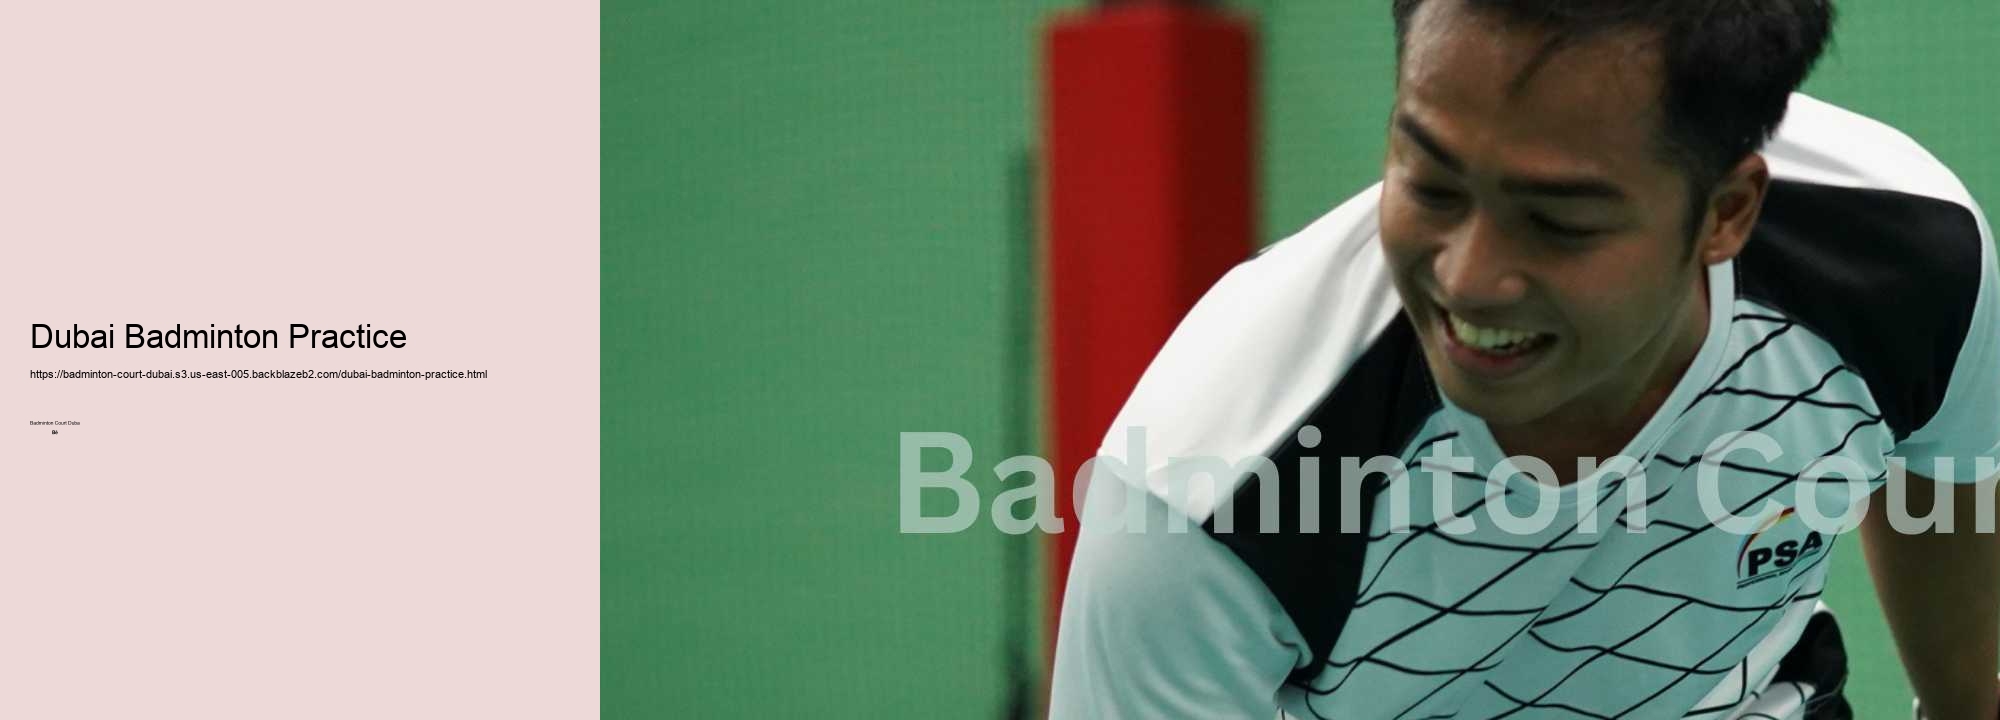 Dubai Badminton Practice